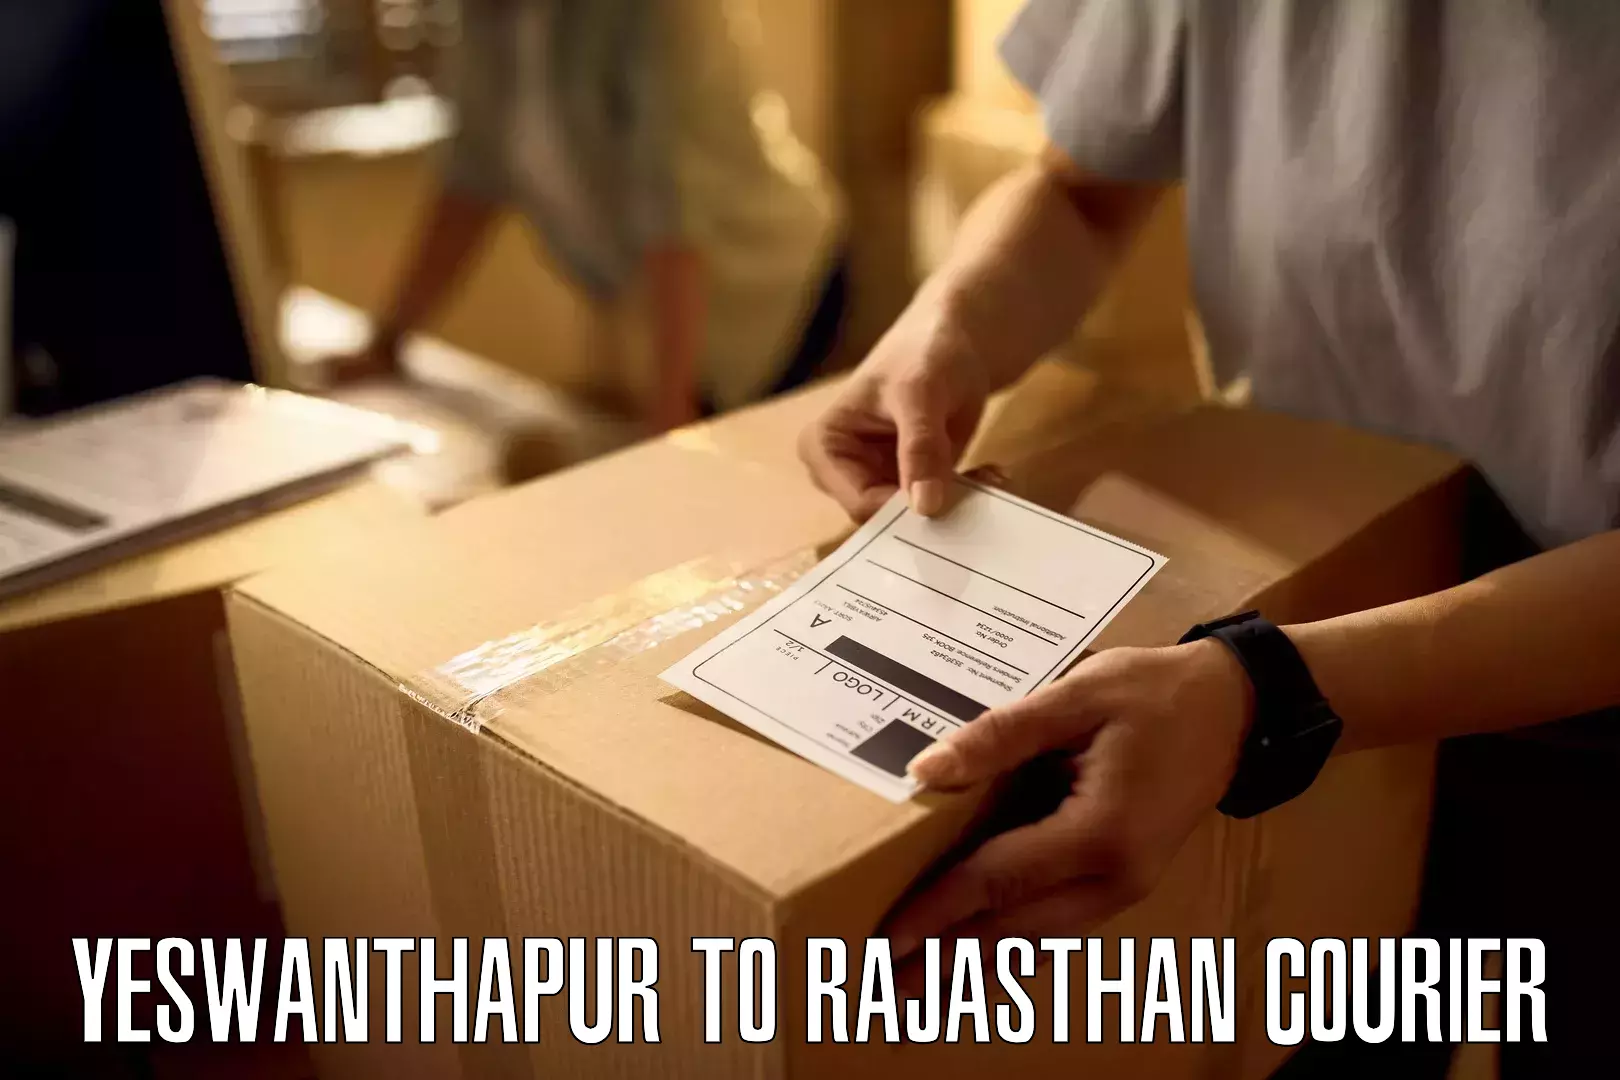 Bulk shipment Yeswanthapur to Bassi